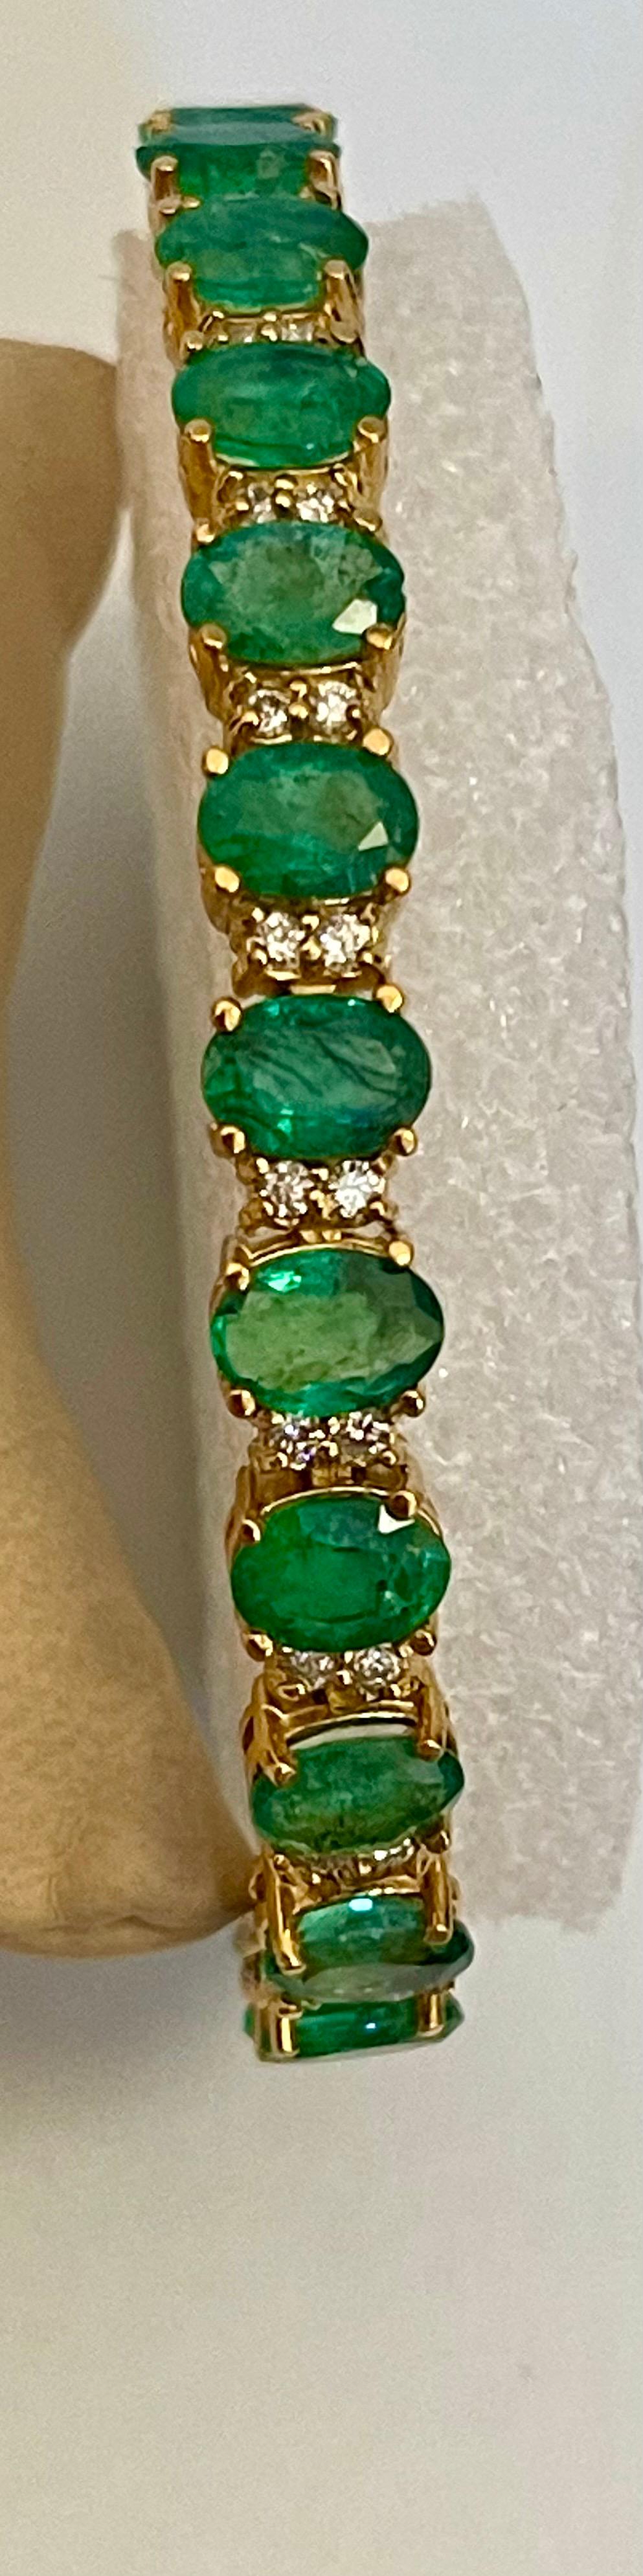 25 Carat Natural Emerald & 1.8 Carat Diamond Tennis Bracelet 18 Kt Yellow Gold For Sale 6